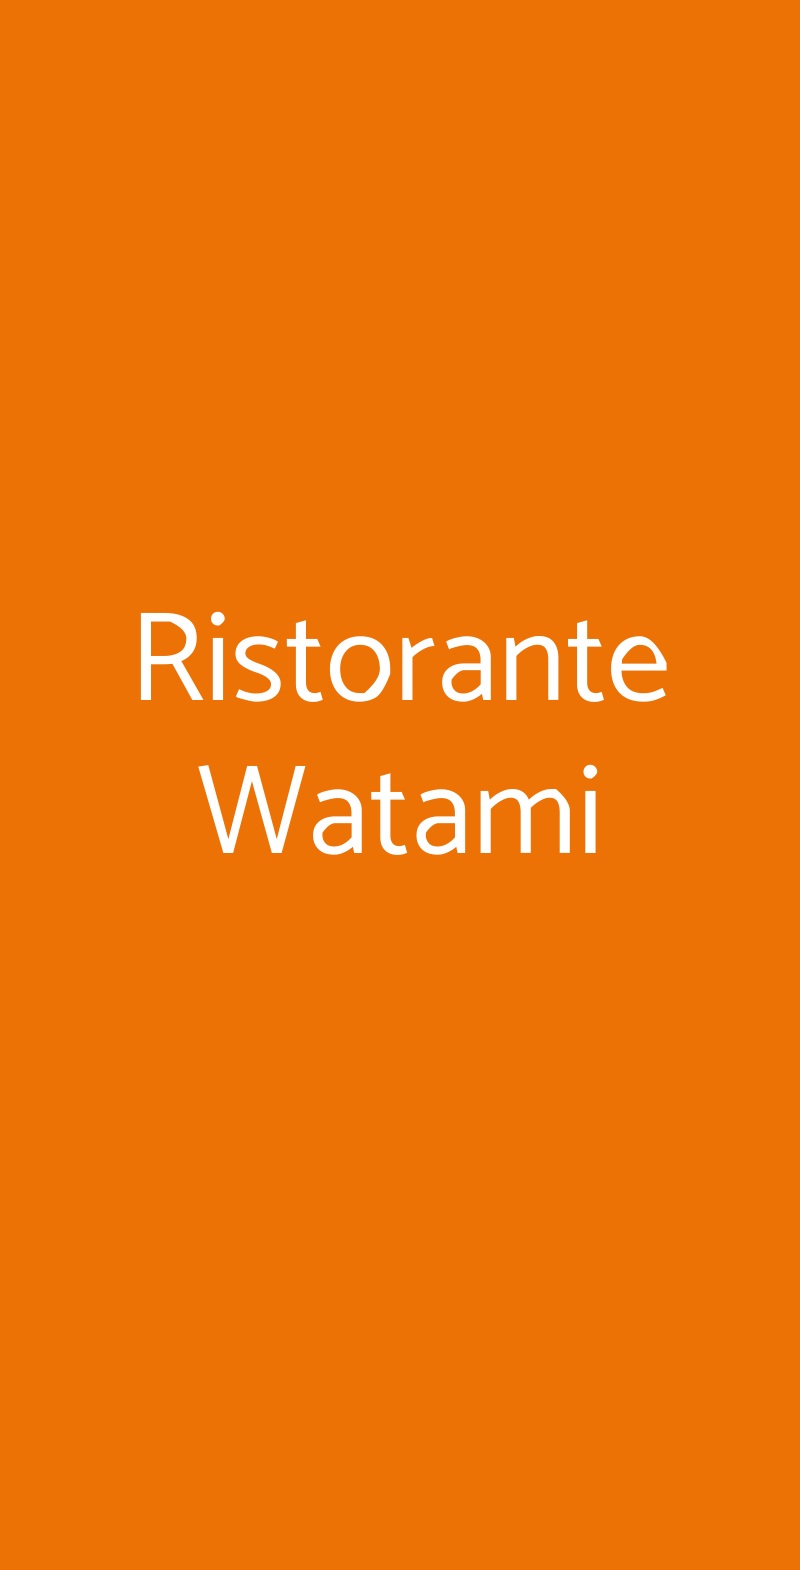 Ristorante Watami Rovereto menù 1 pagina